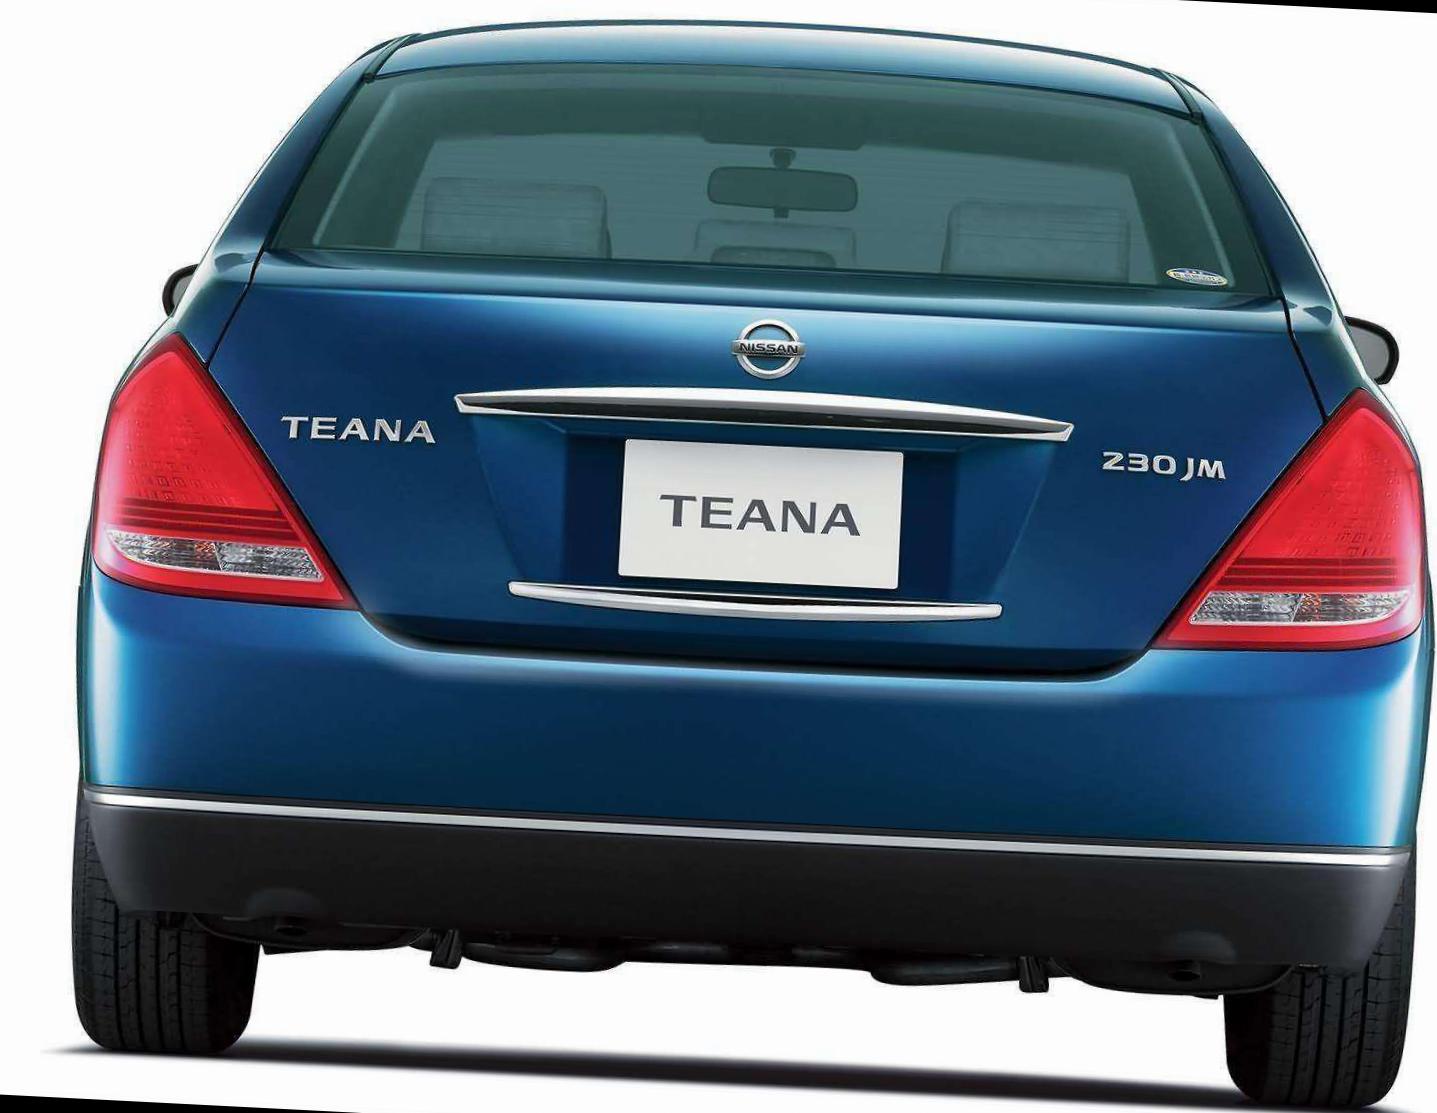 Nissan Teana prices 2010